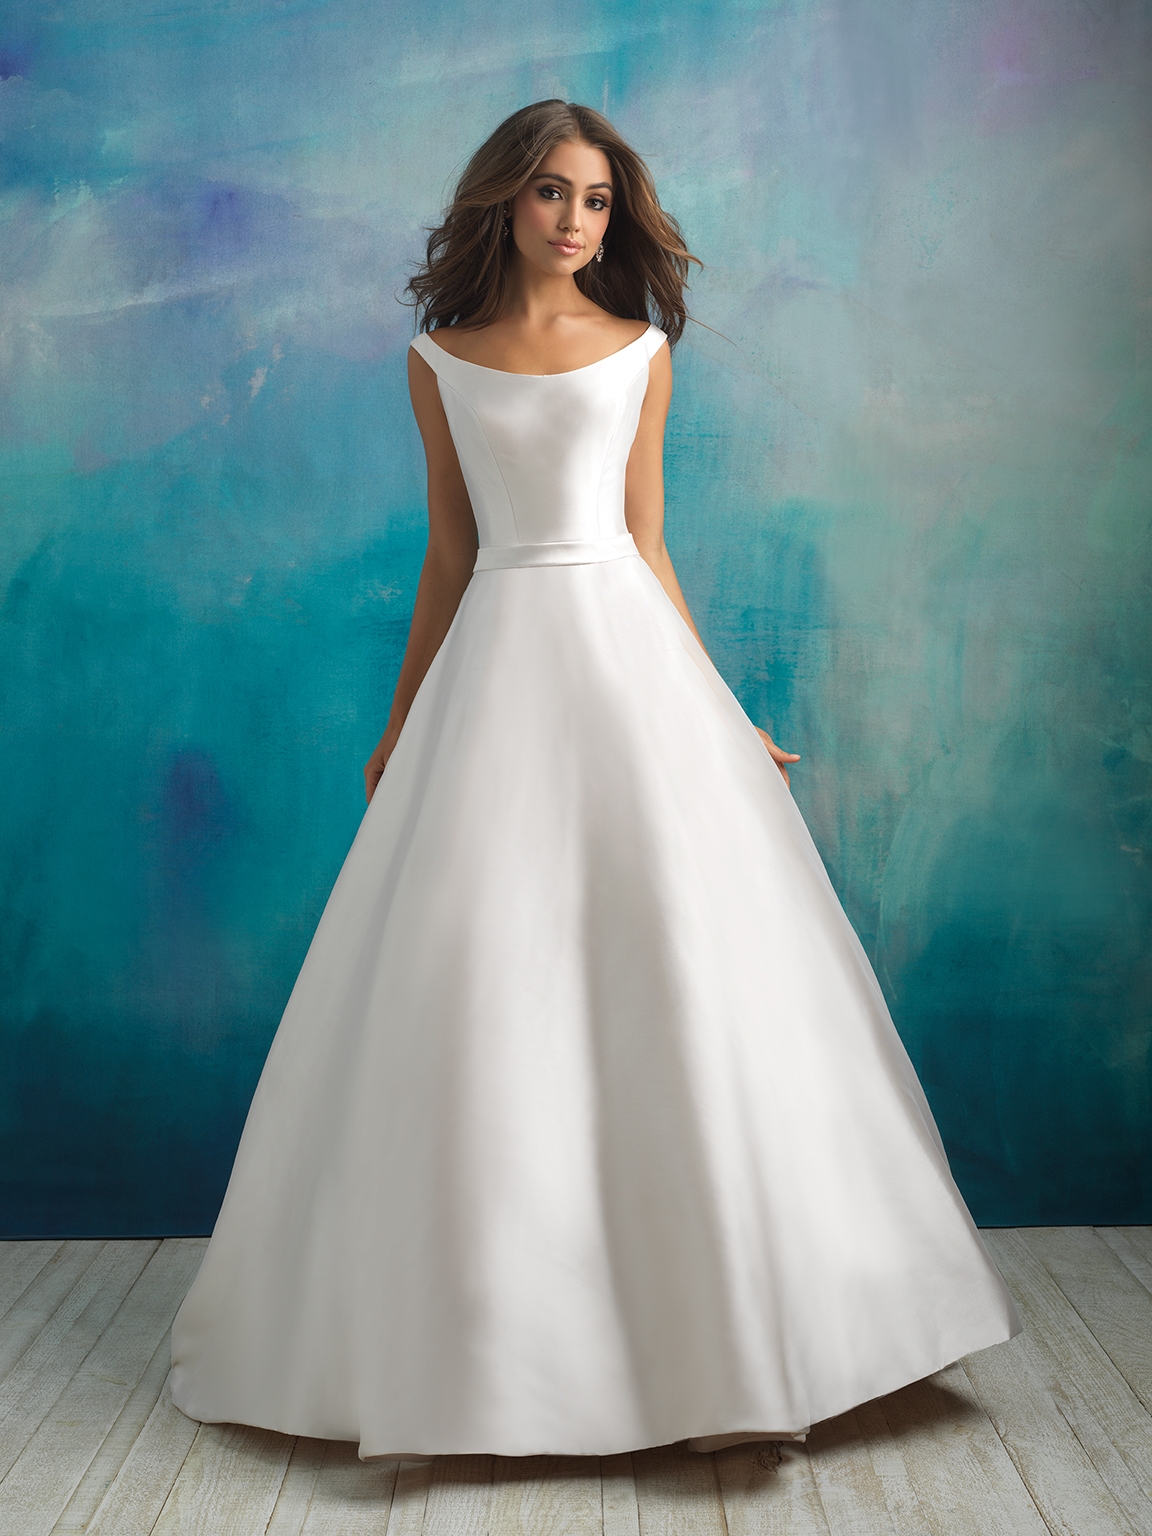 Model wearing a white dress 4